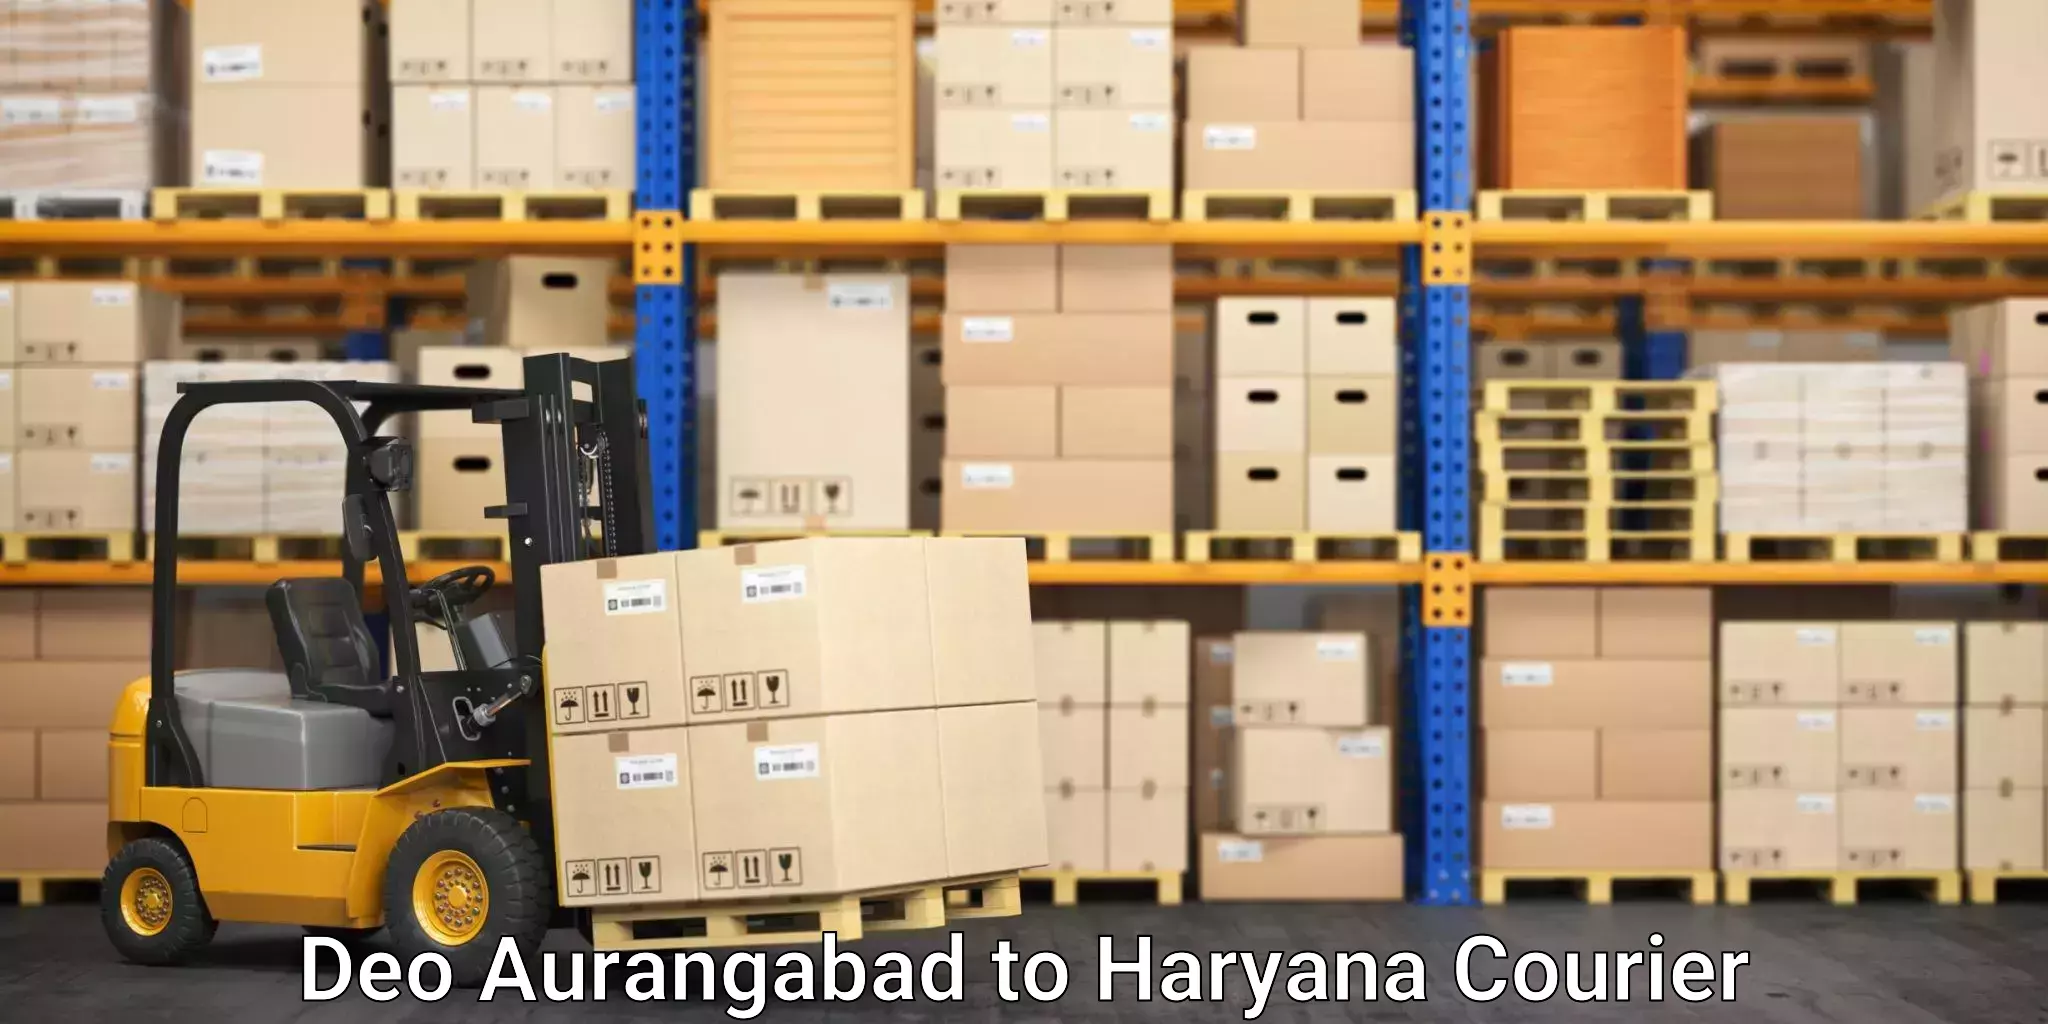 Expert goods movers Deo Aurangabad to Bilaspur Haryana